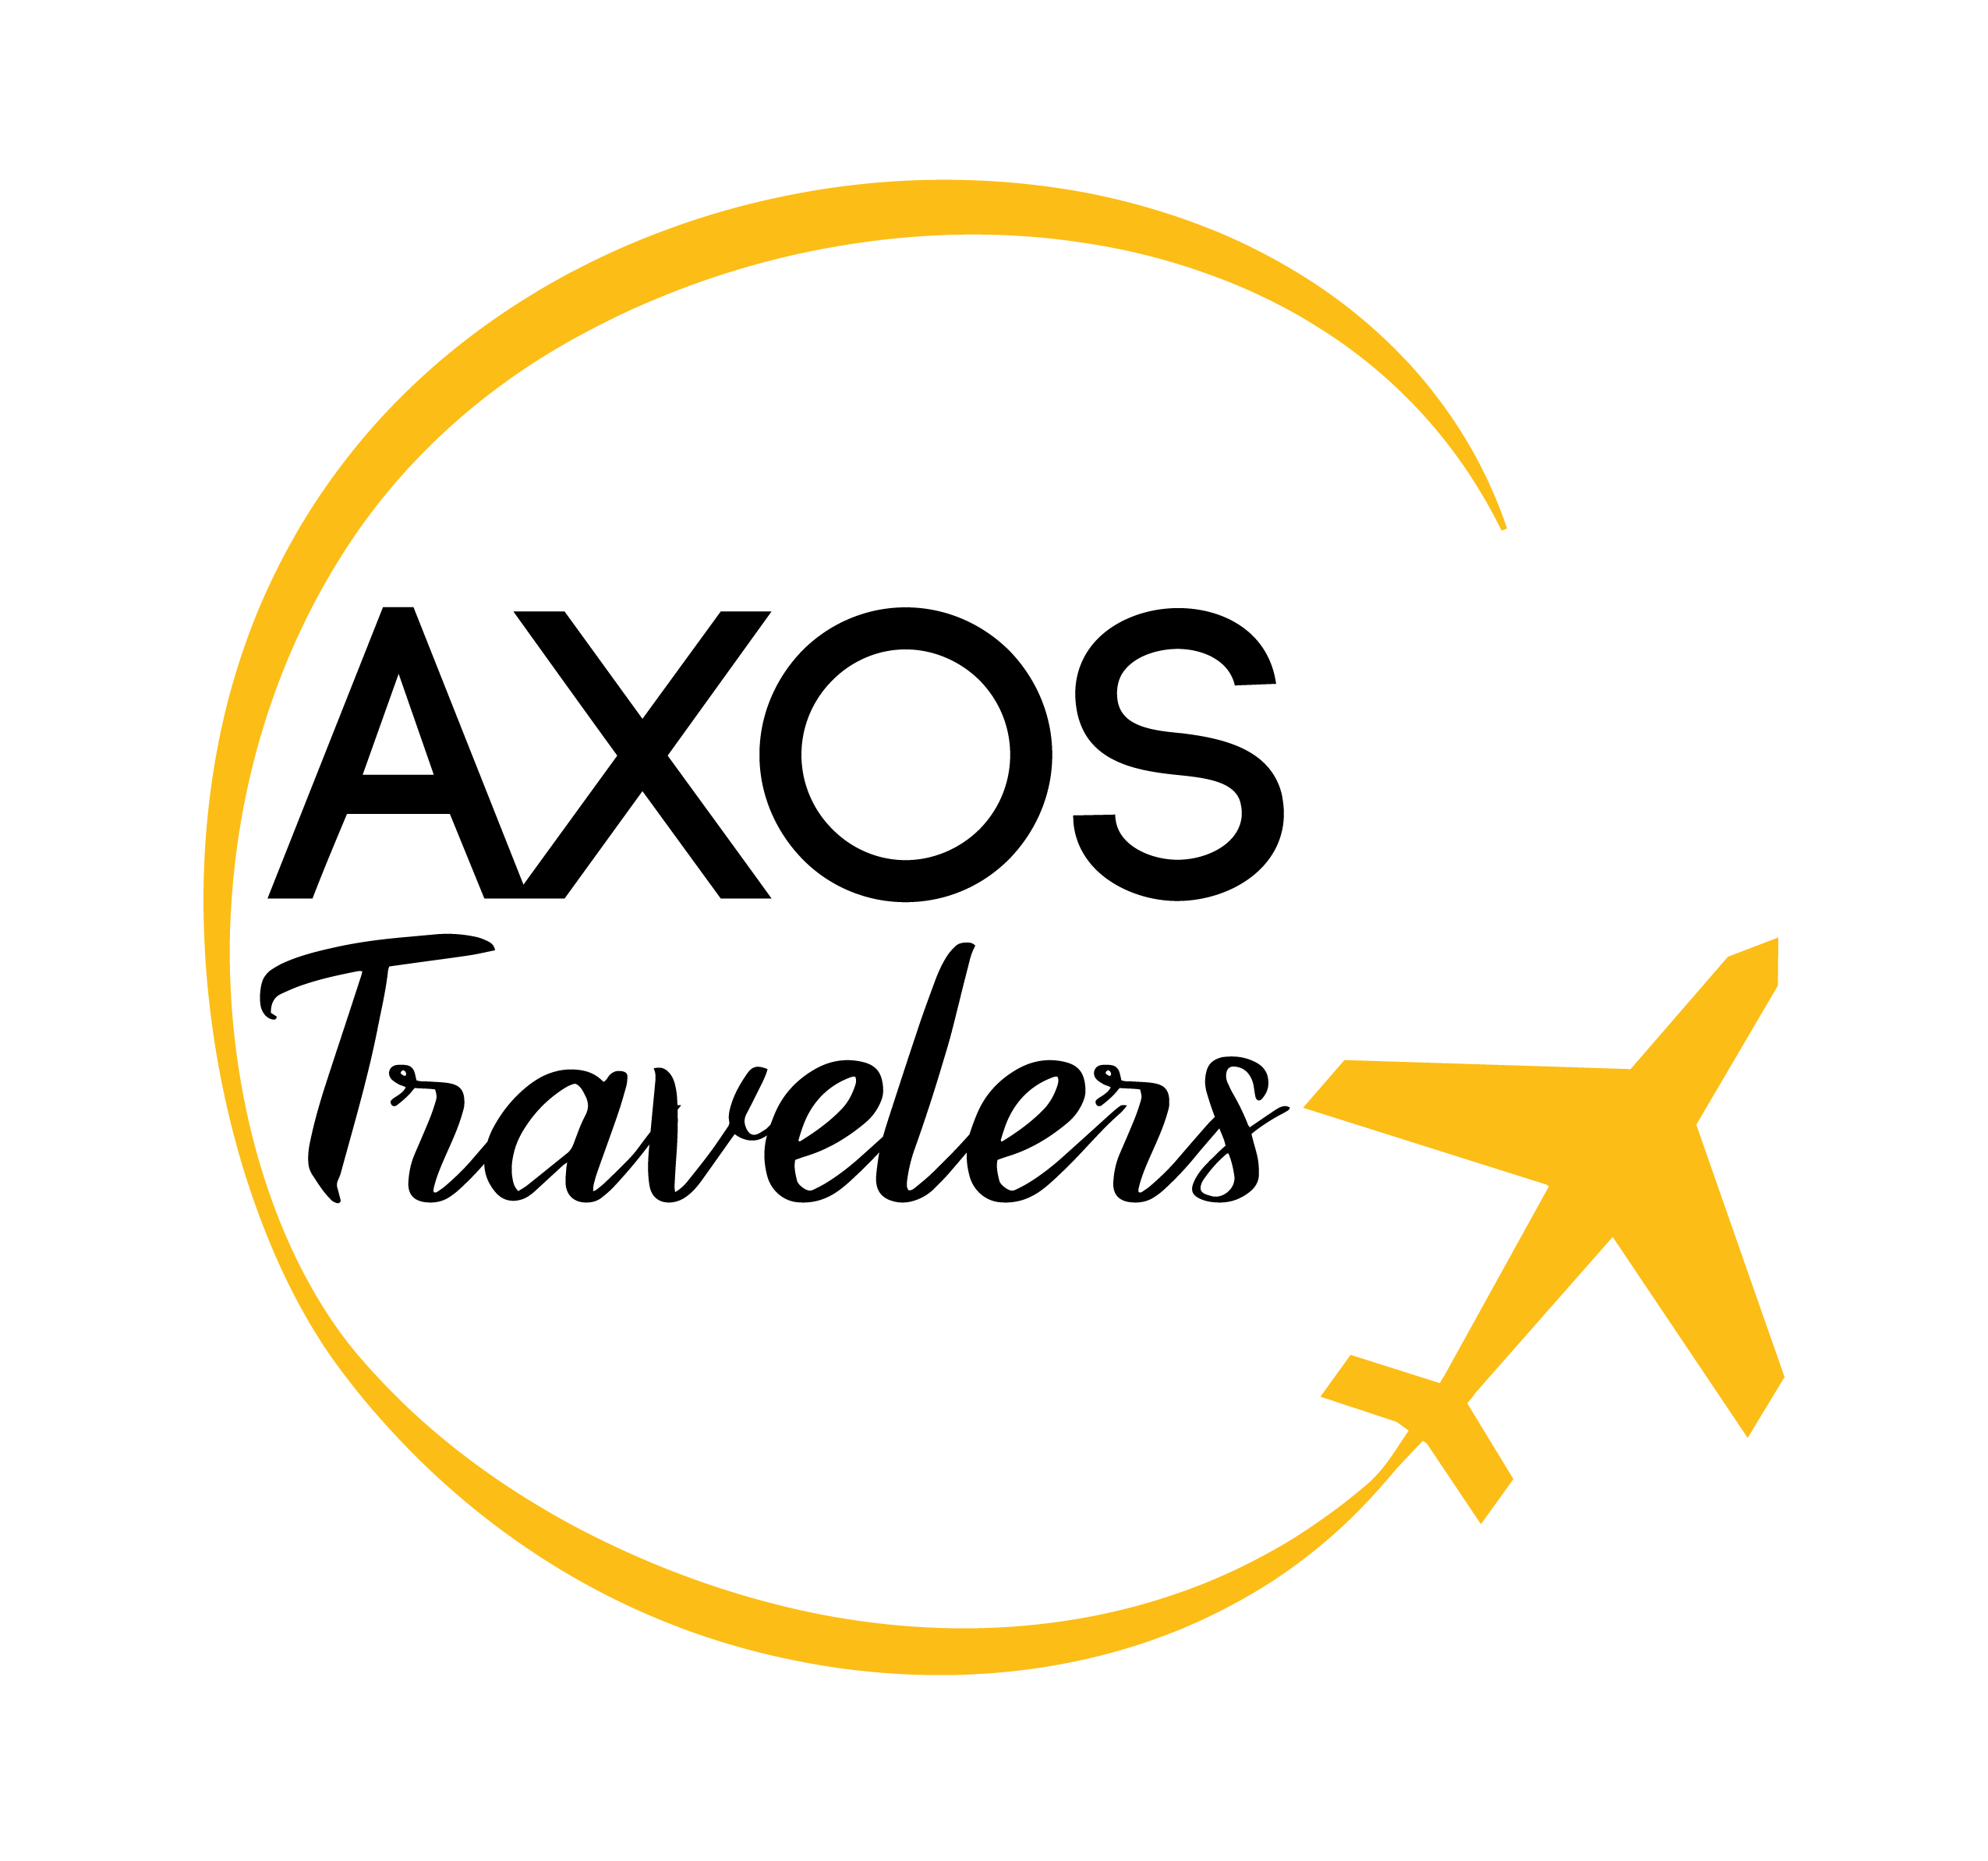 AXOS Travelers